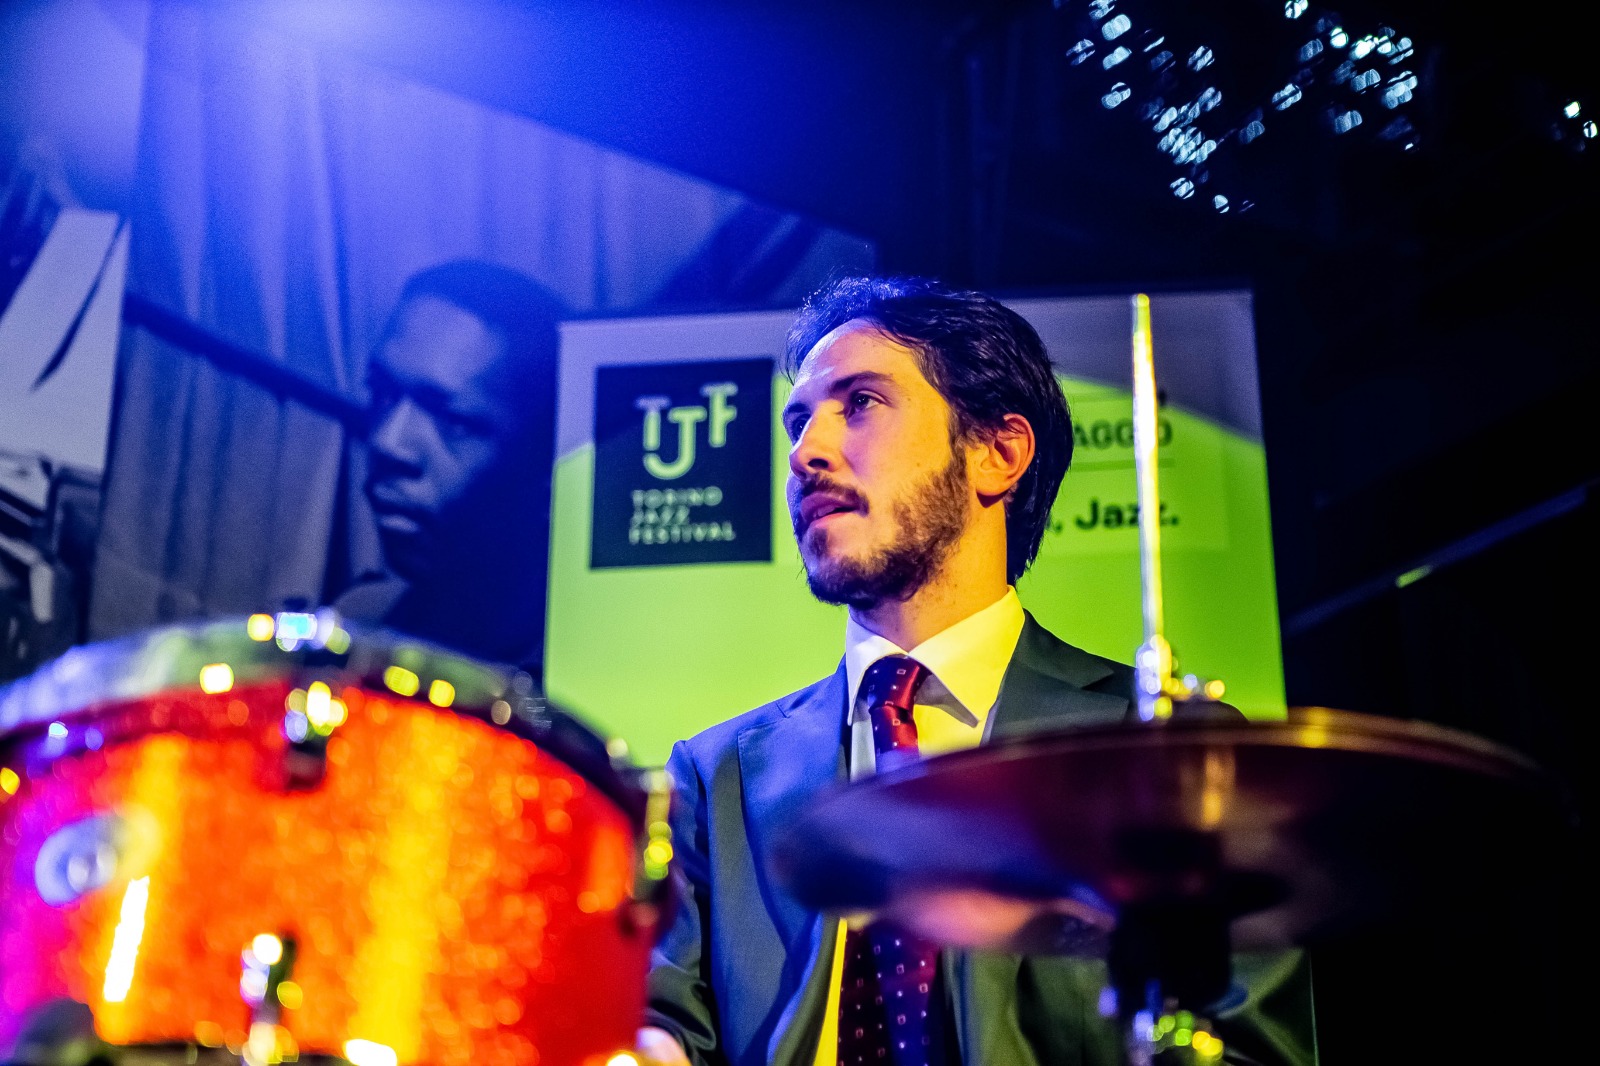 Marco Betti at Torino Jazz Festival